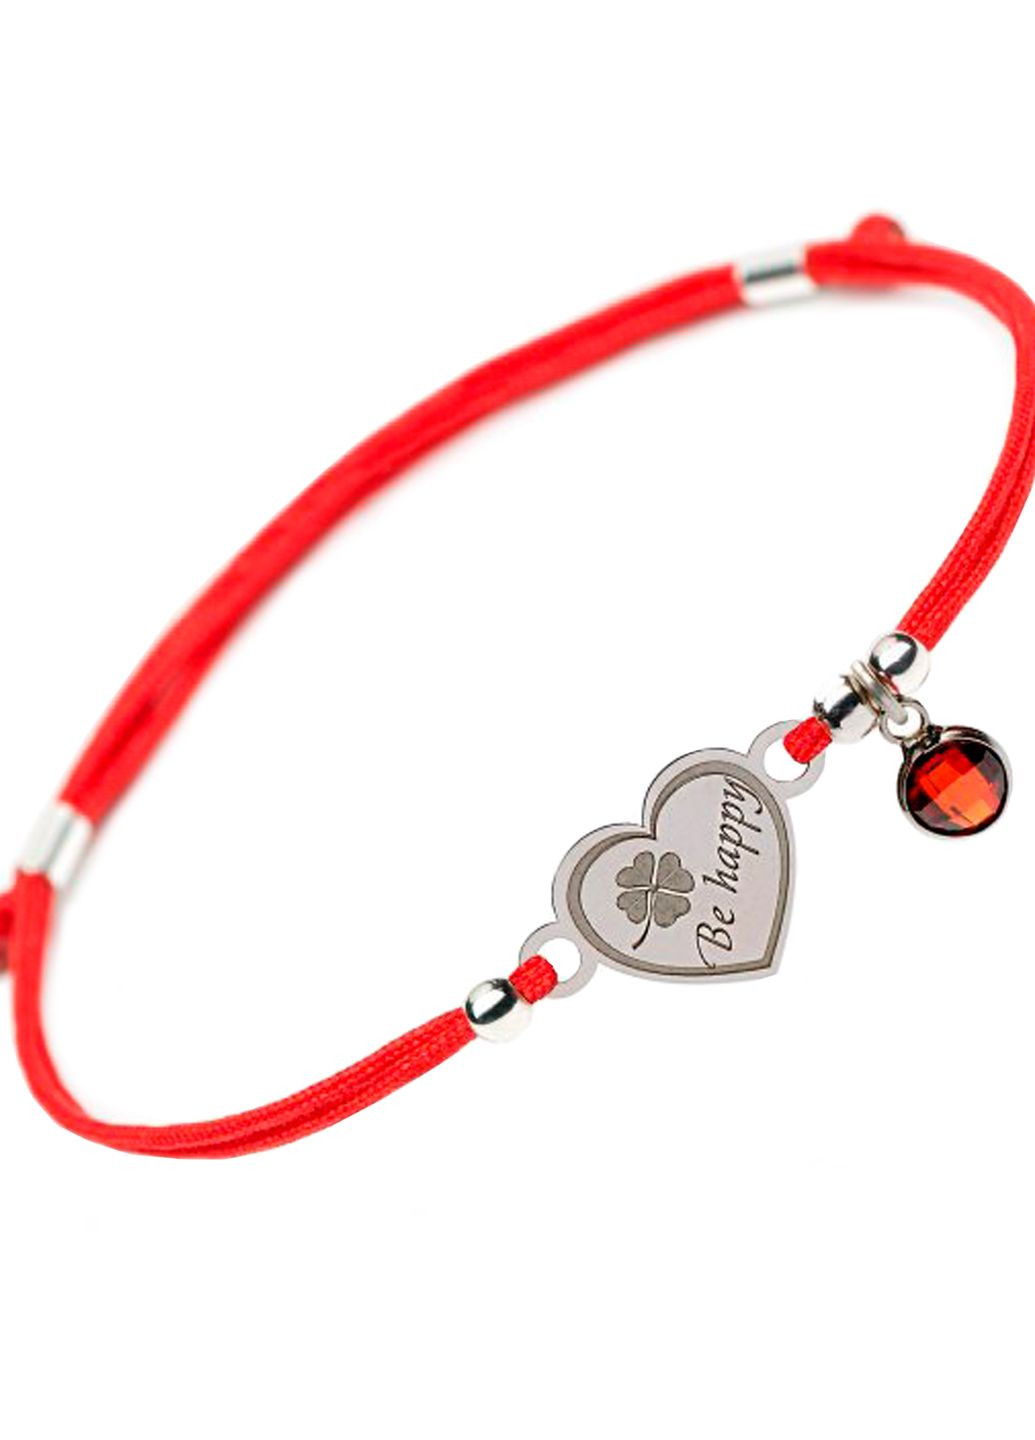 Серебряный браслет Красный Be happy heart with Red Pendant регулируется Family Tree Jewelry Line (266339307)